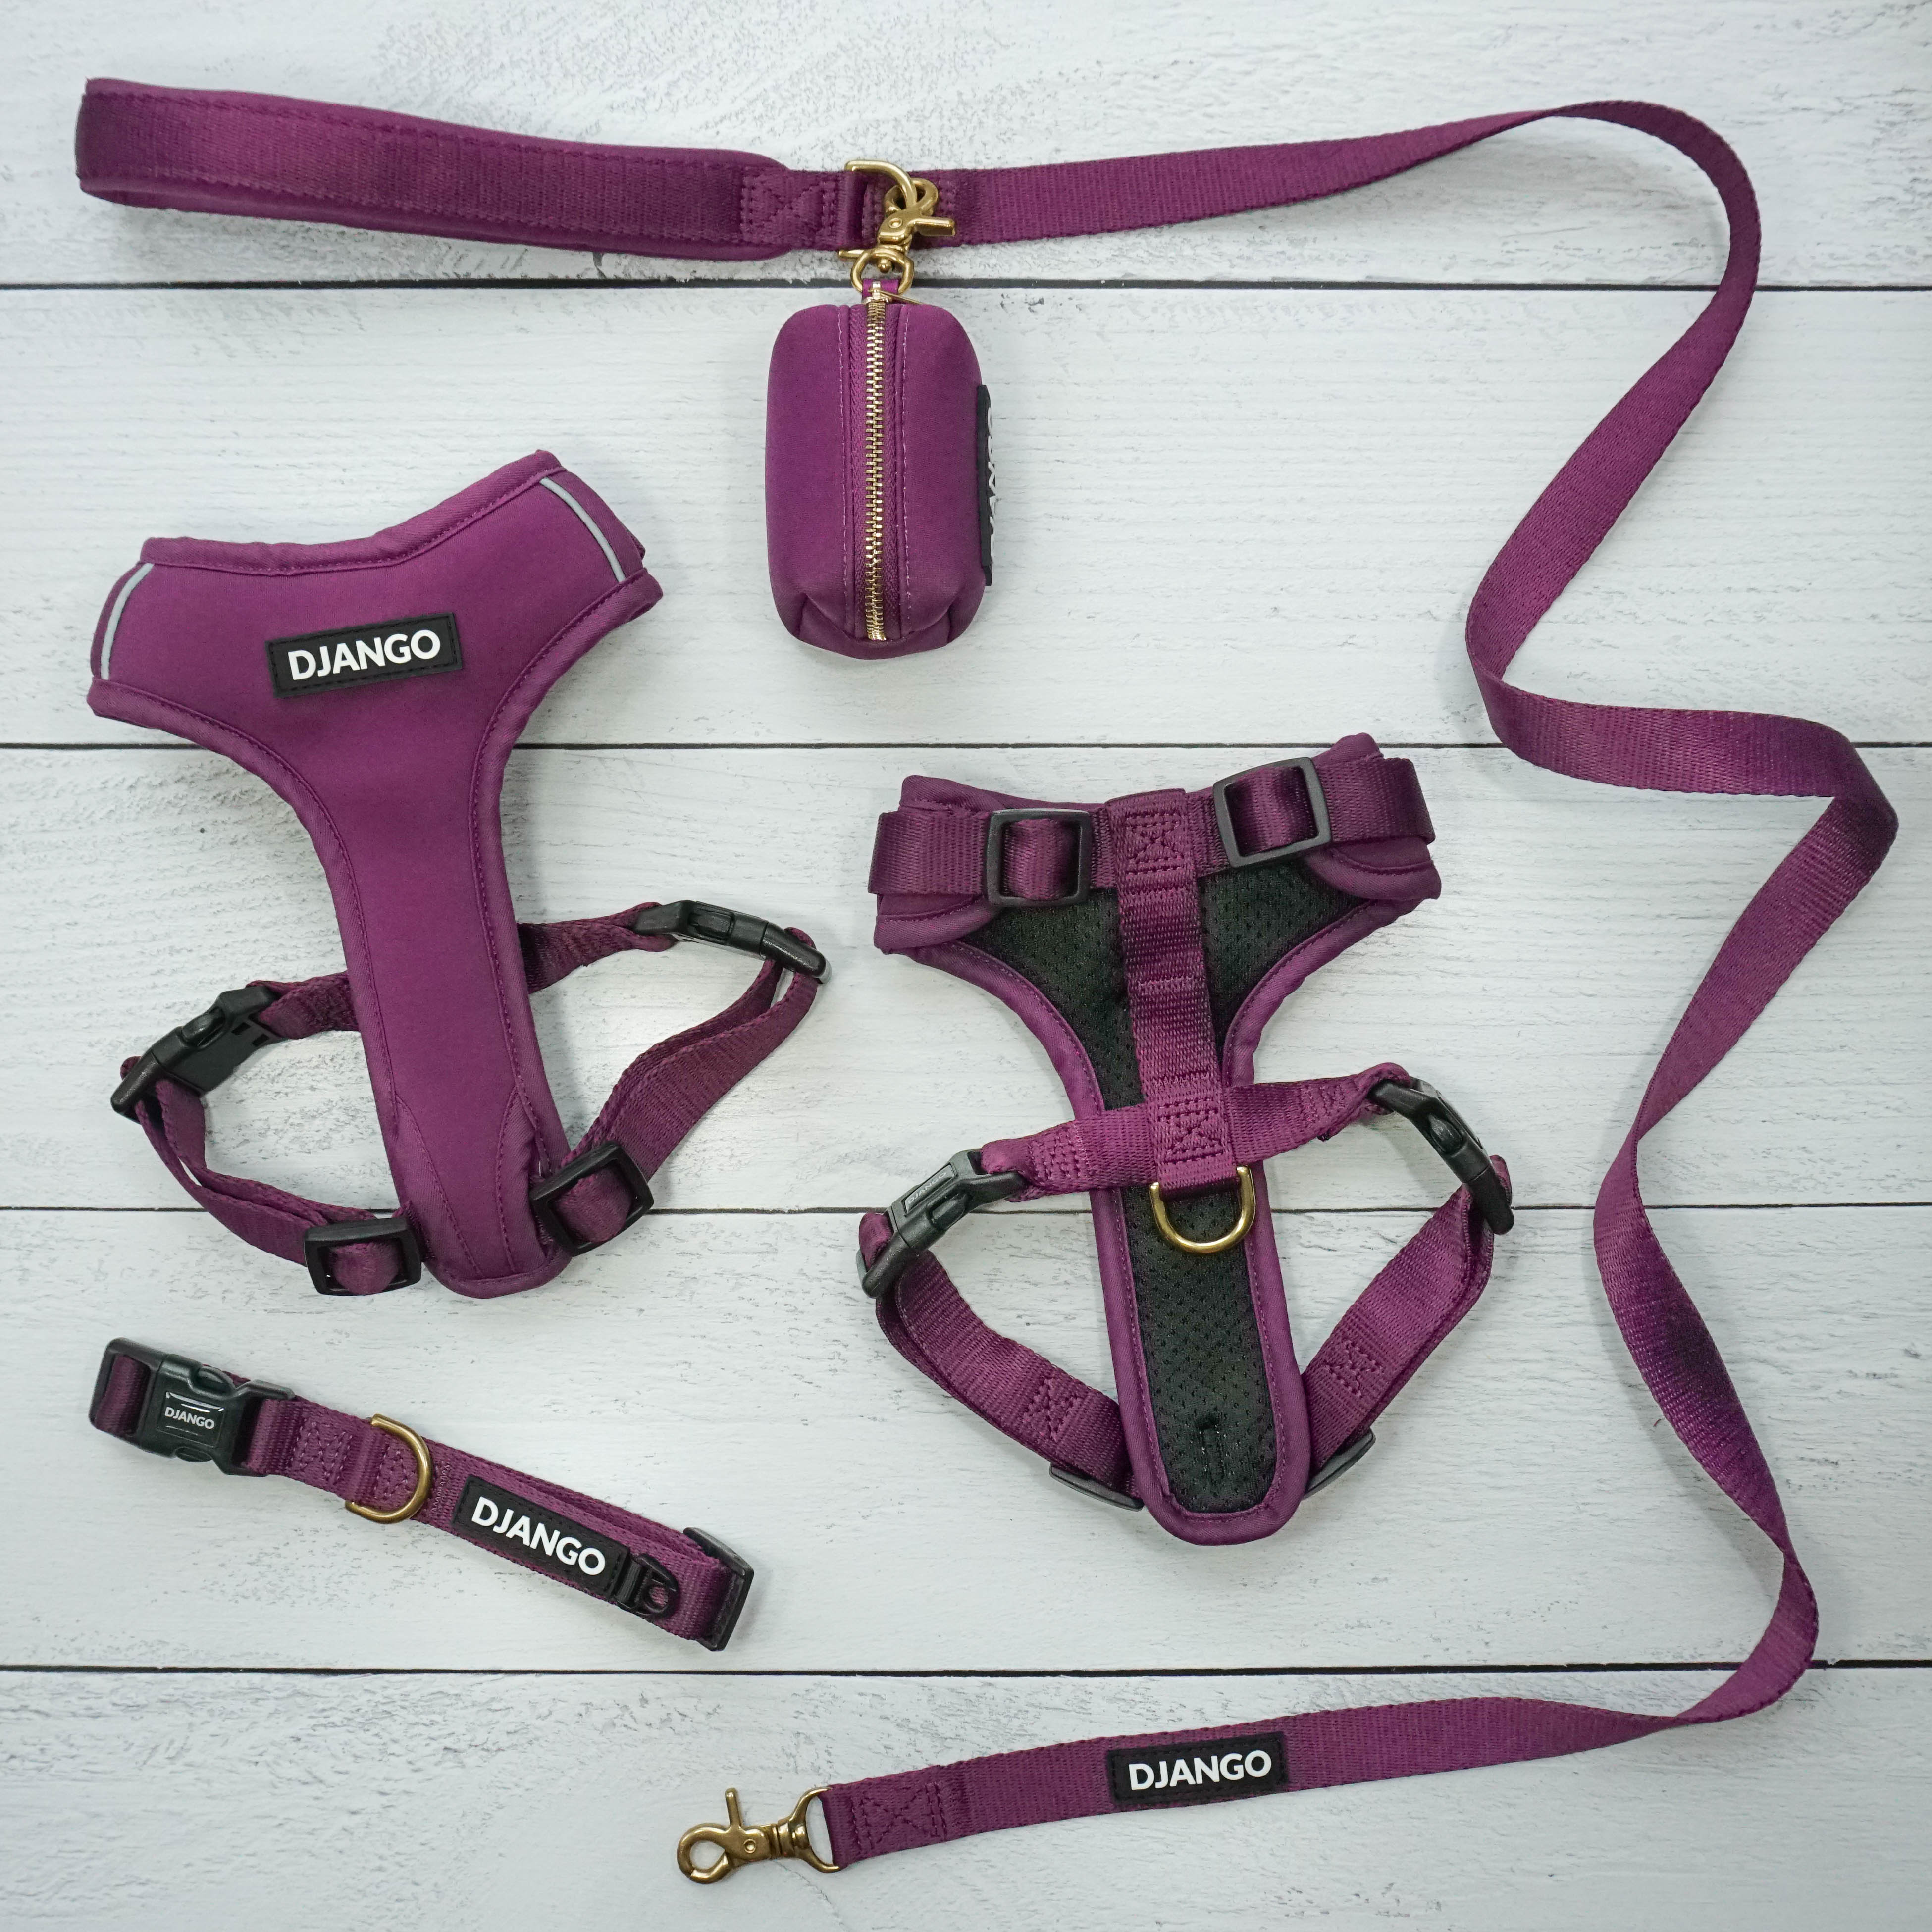 DJANGO Adventure Dog Harness, Collar, Leash, and Waste Bag Holder Collection in Color Plum Purple - djangobrand.com